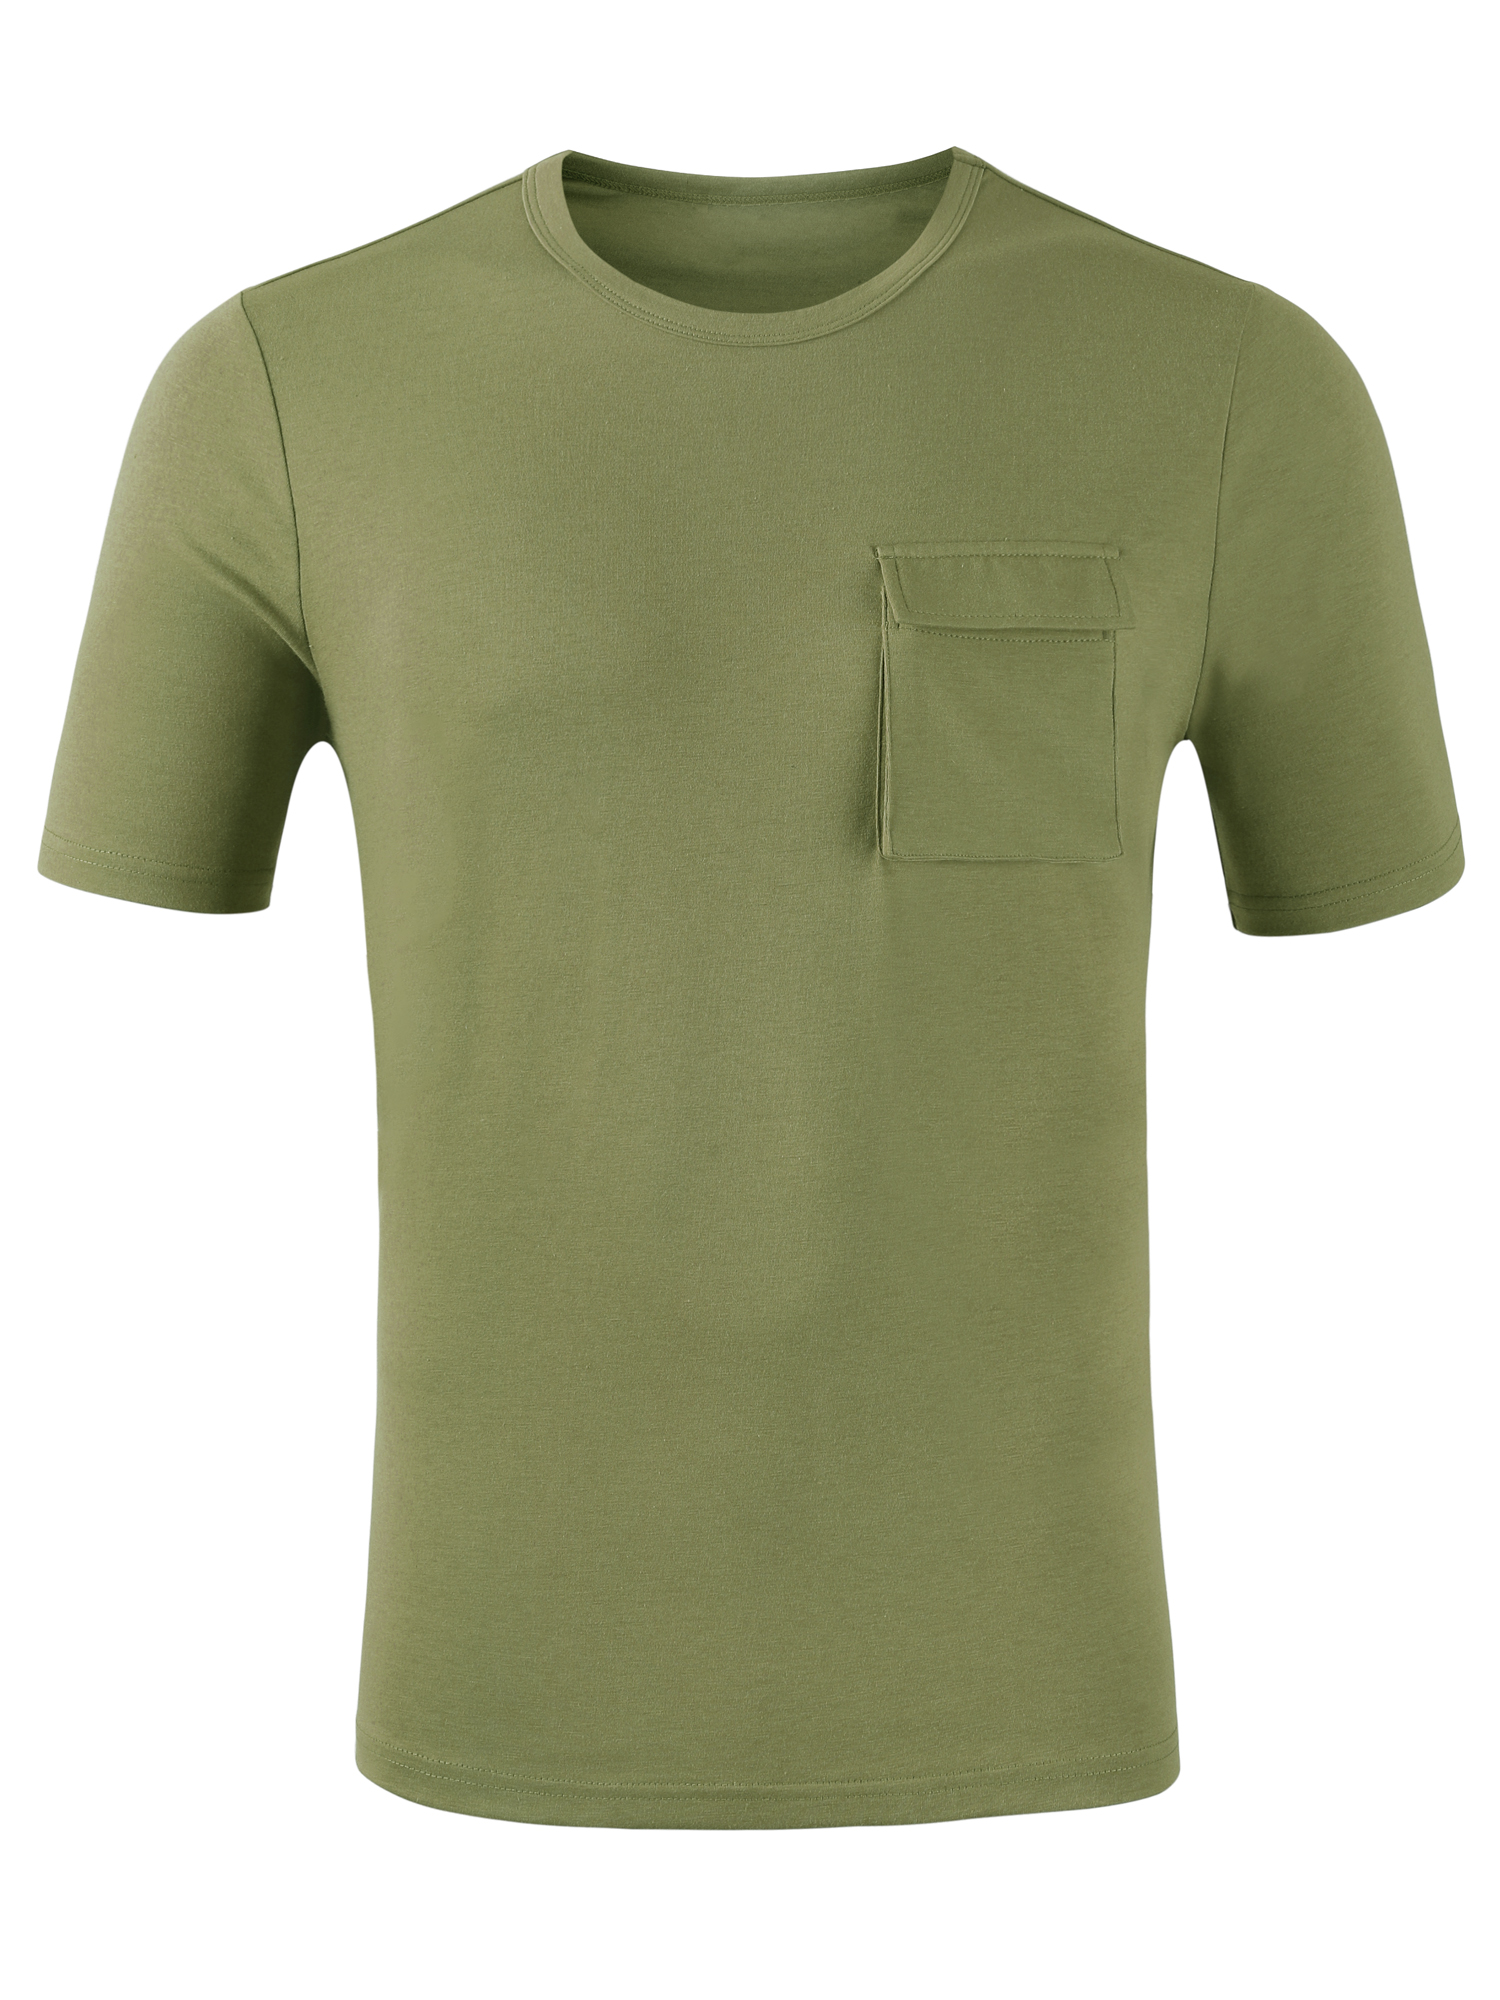 MODA NOVA Big & Tall Men's Crew Neck Short Sleeve Classic Cargo Pocket T-shirts - image 2 of 5